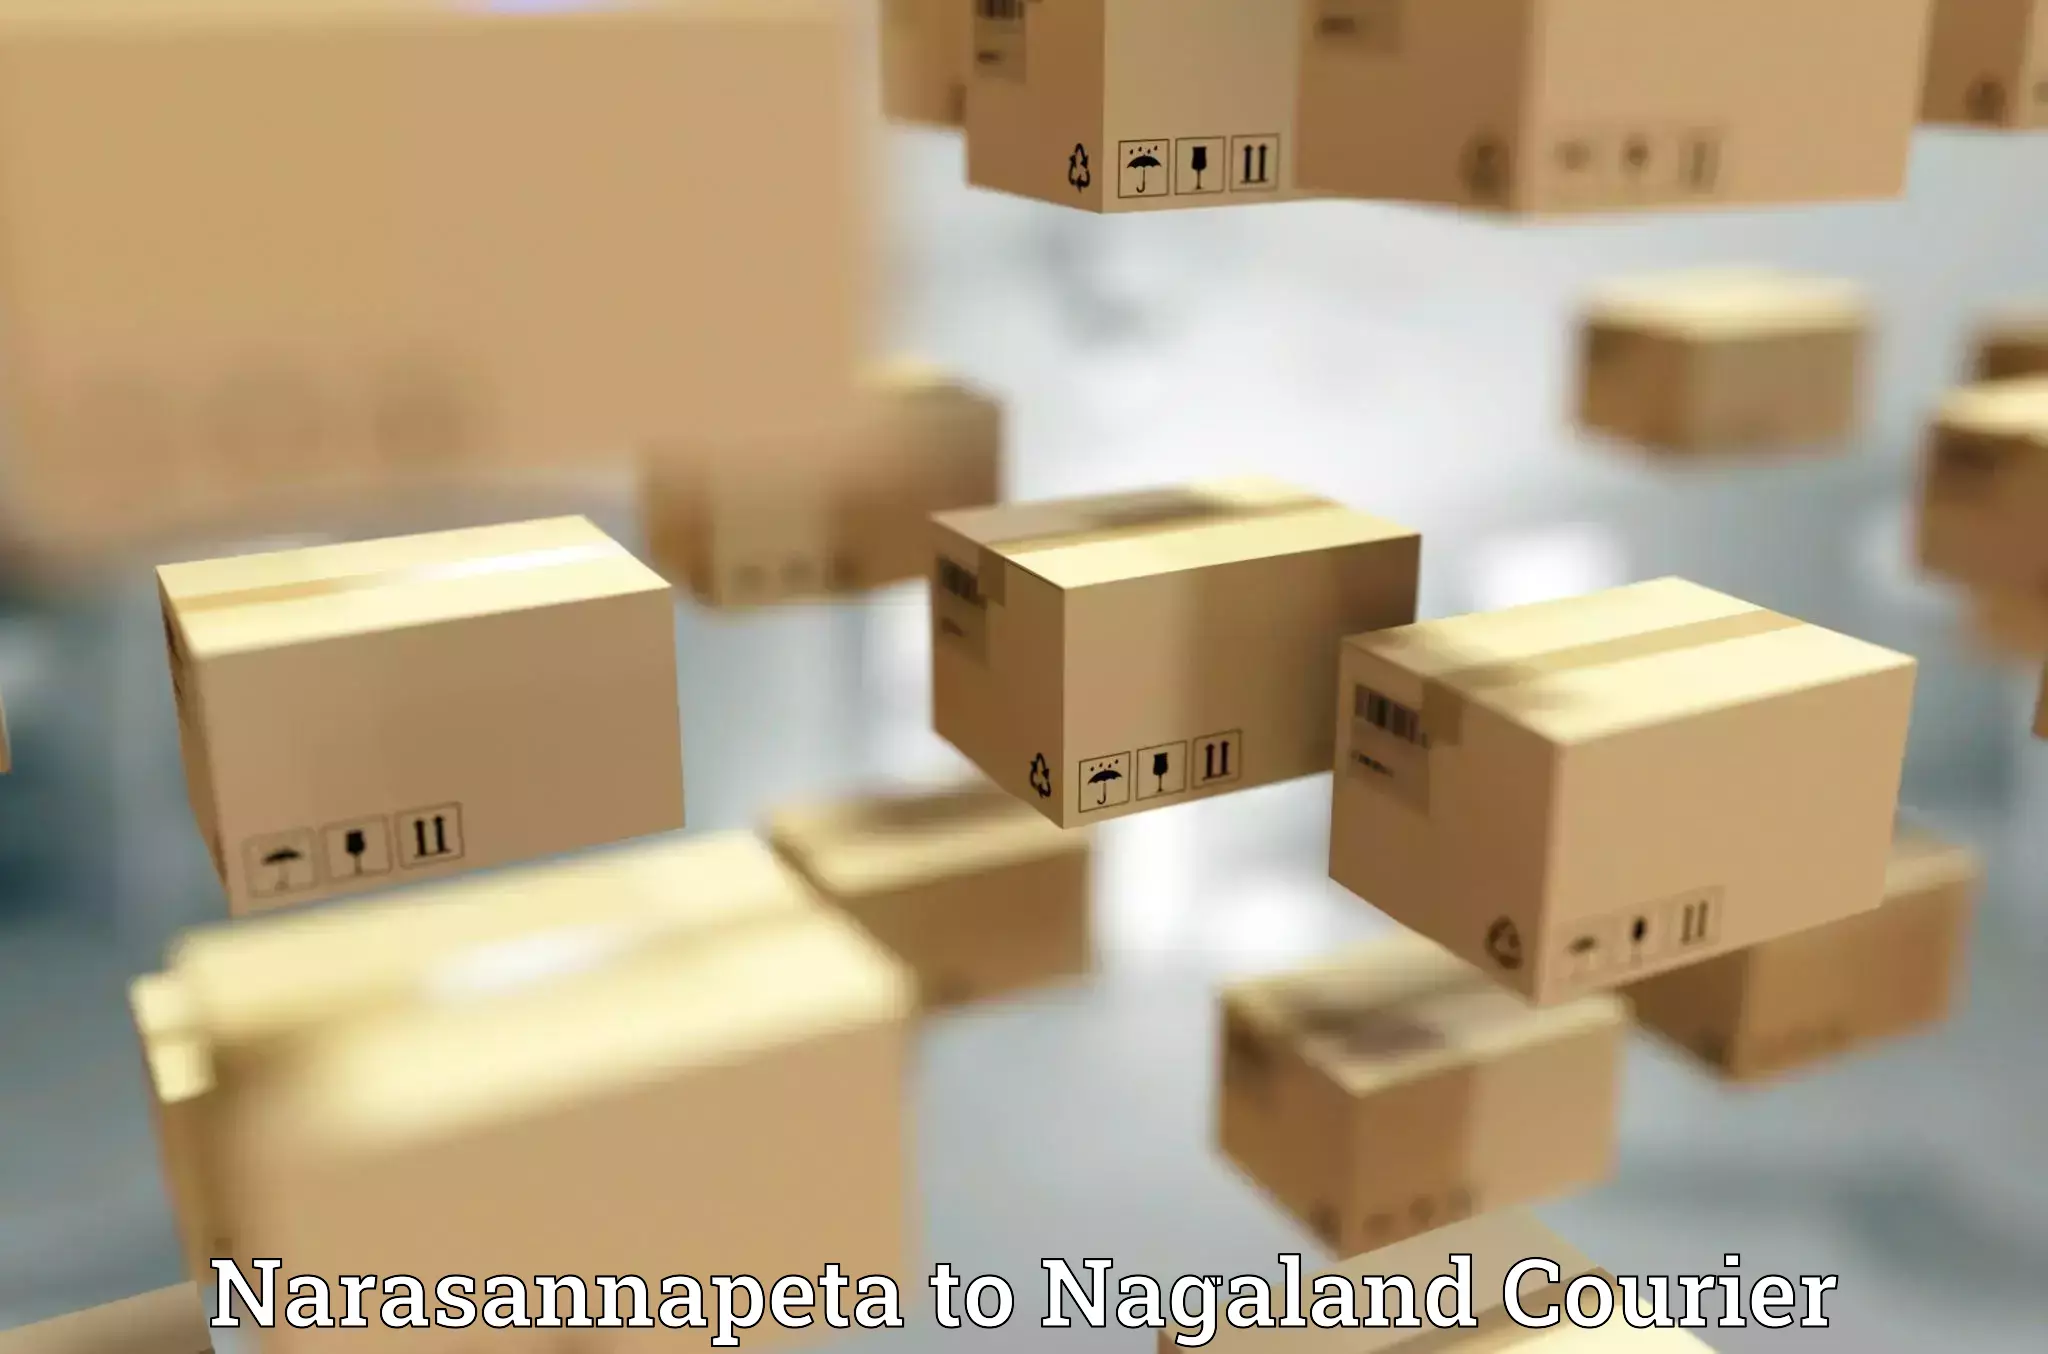 Digital courier platforms Narasannapeta to Mokokchung